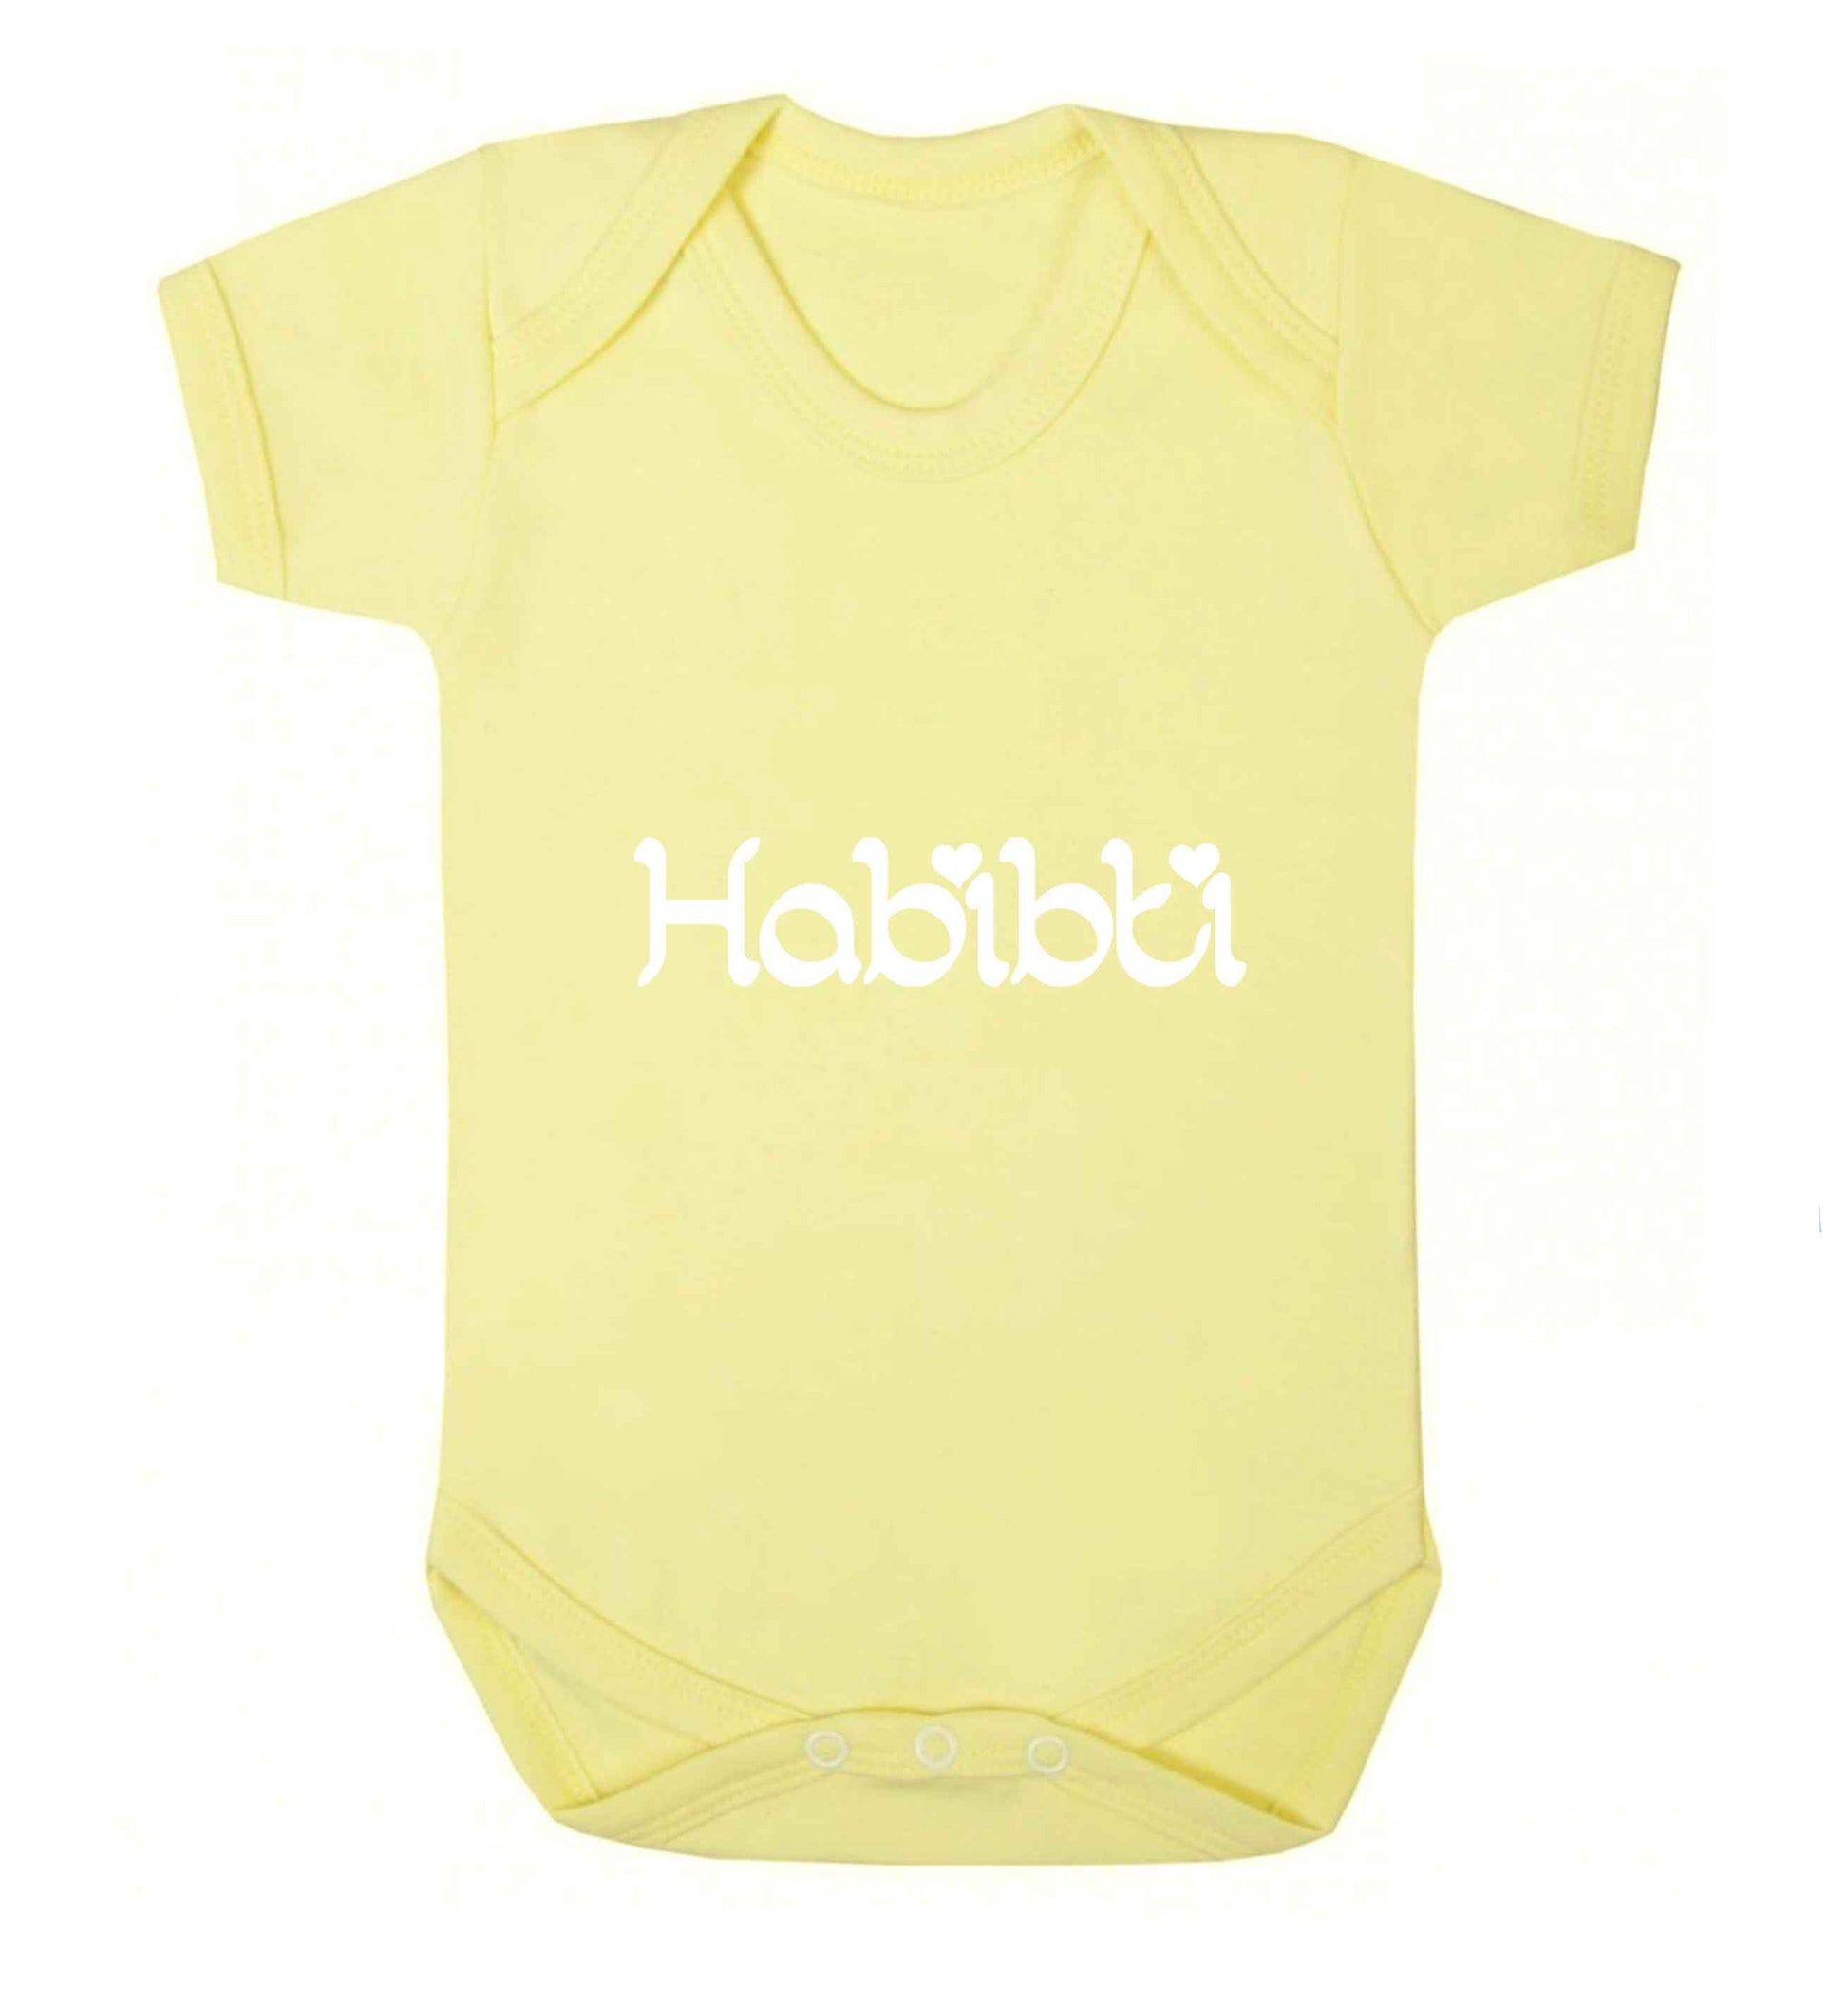 Habibiti baby vest pale yellow 18-24 months